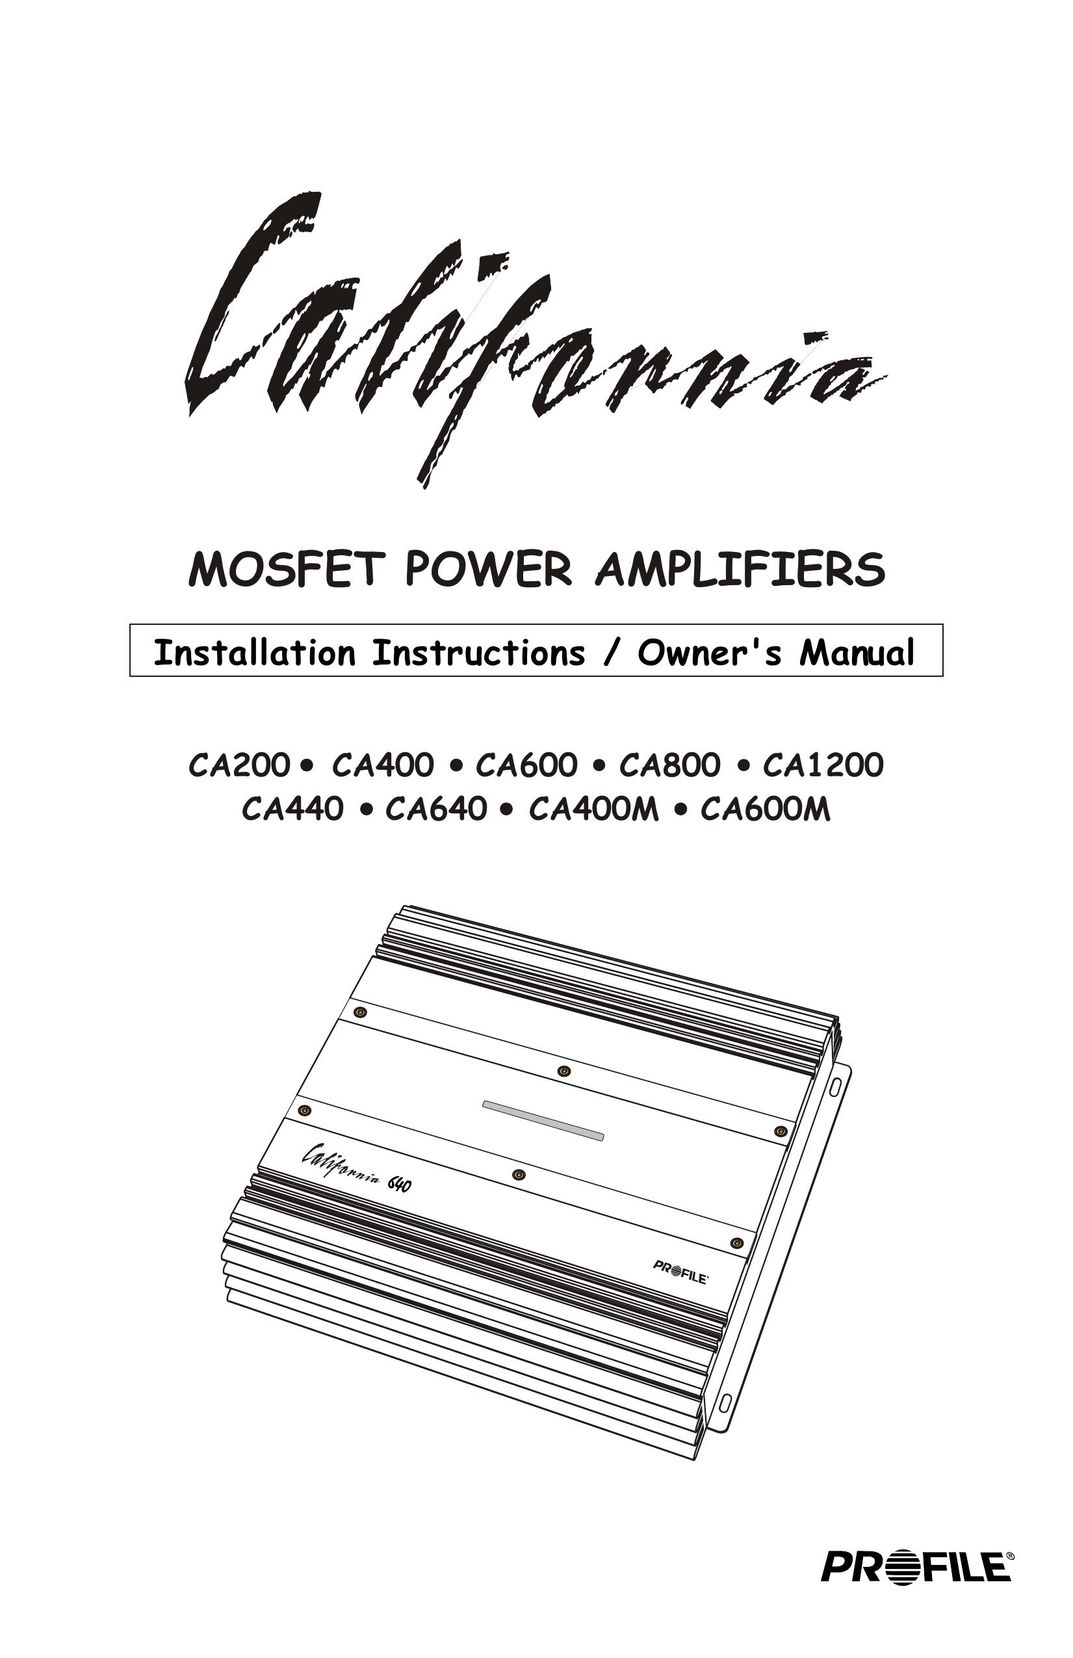 Profile CA200 Stereo Amplifier User Manual